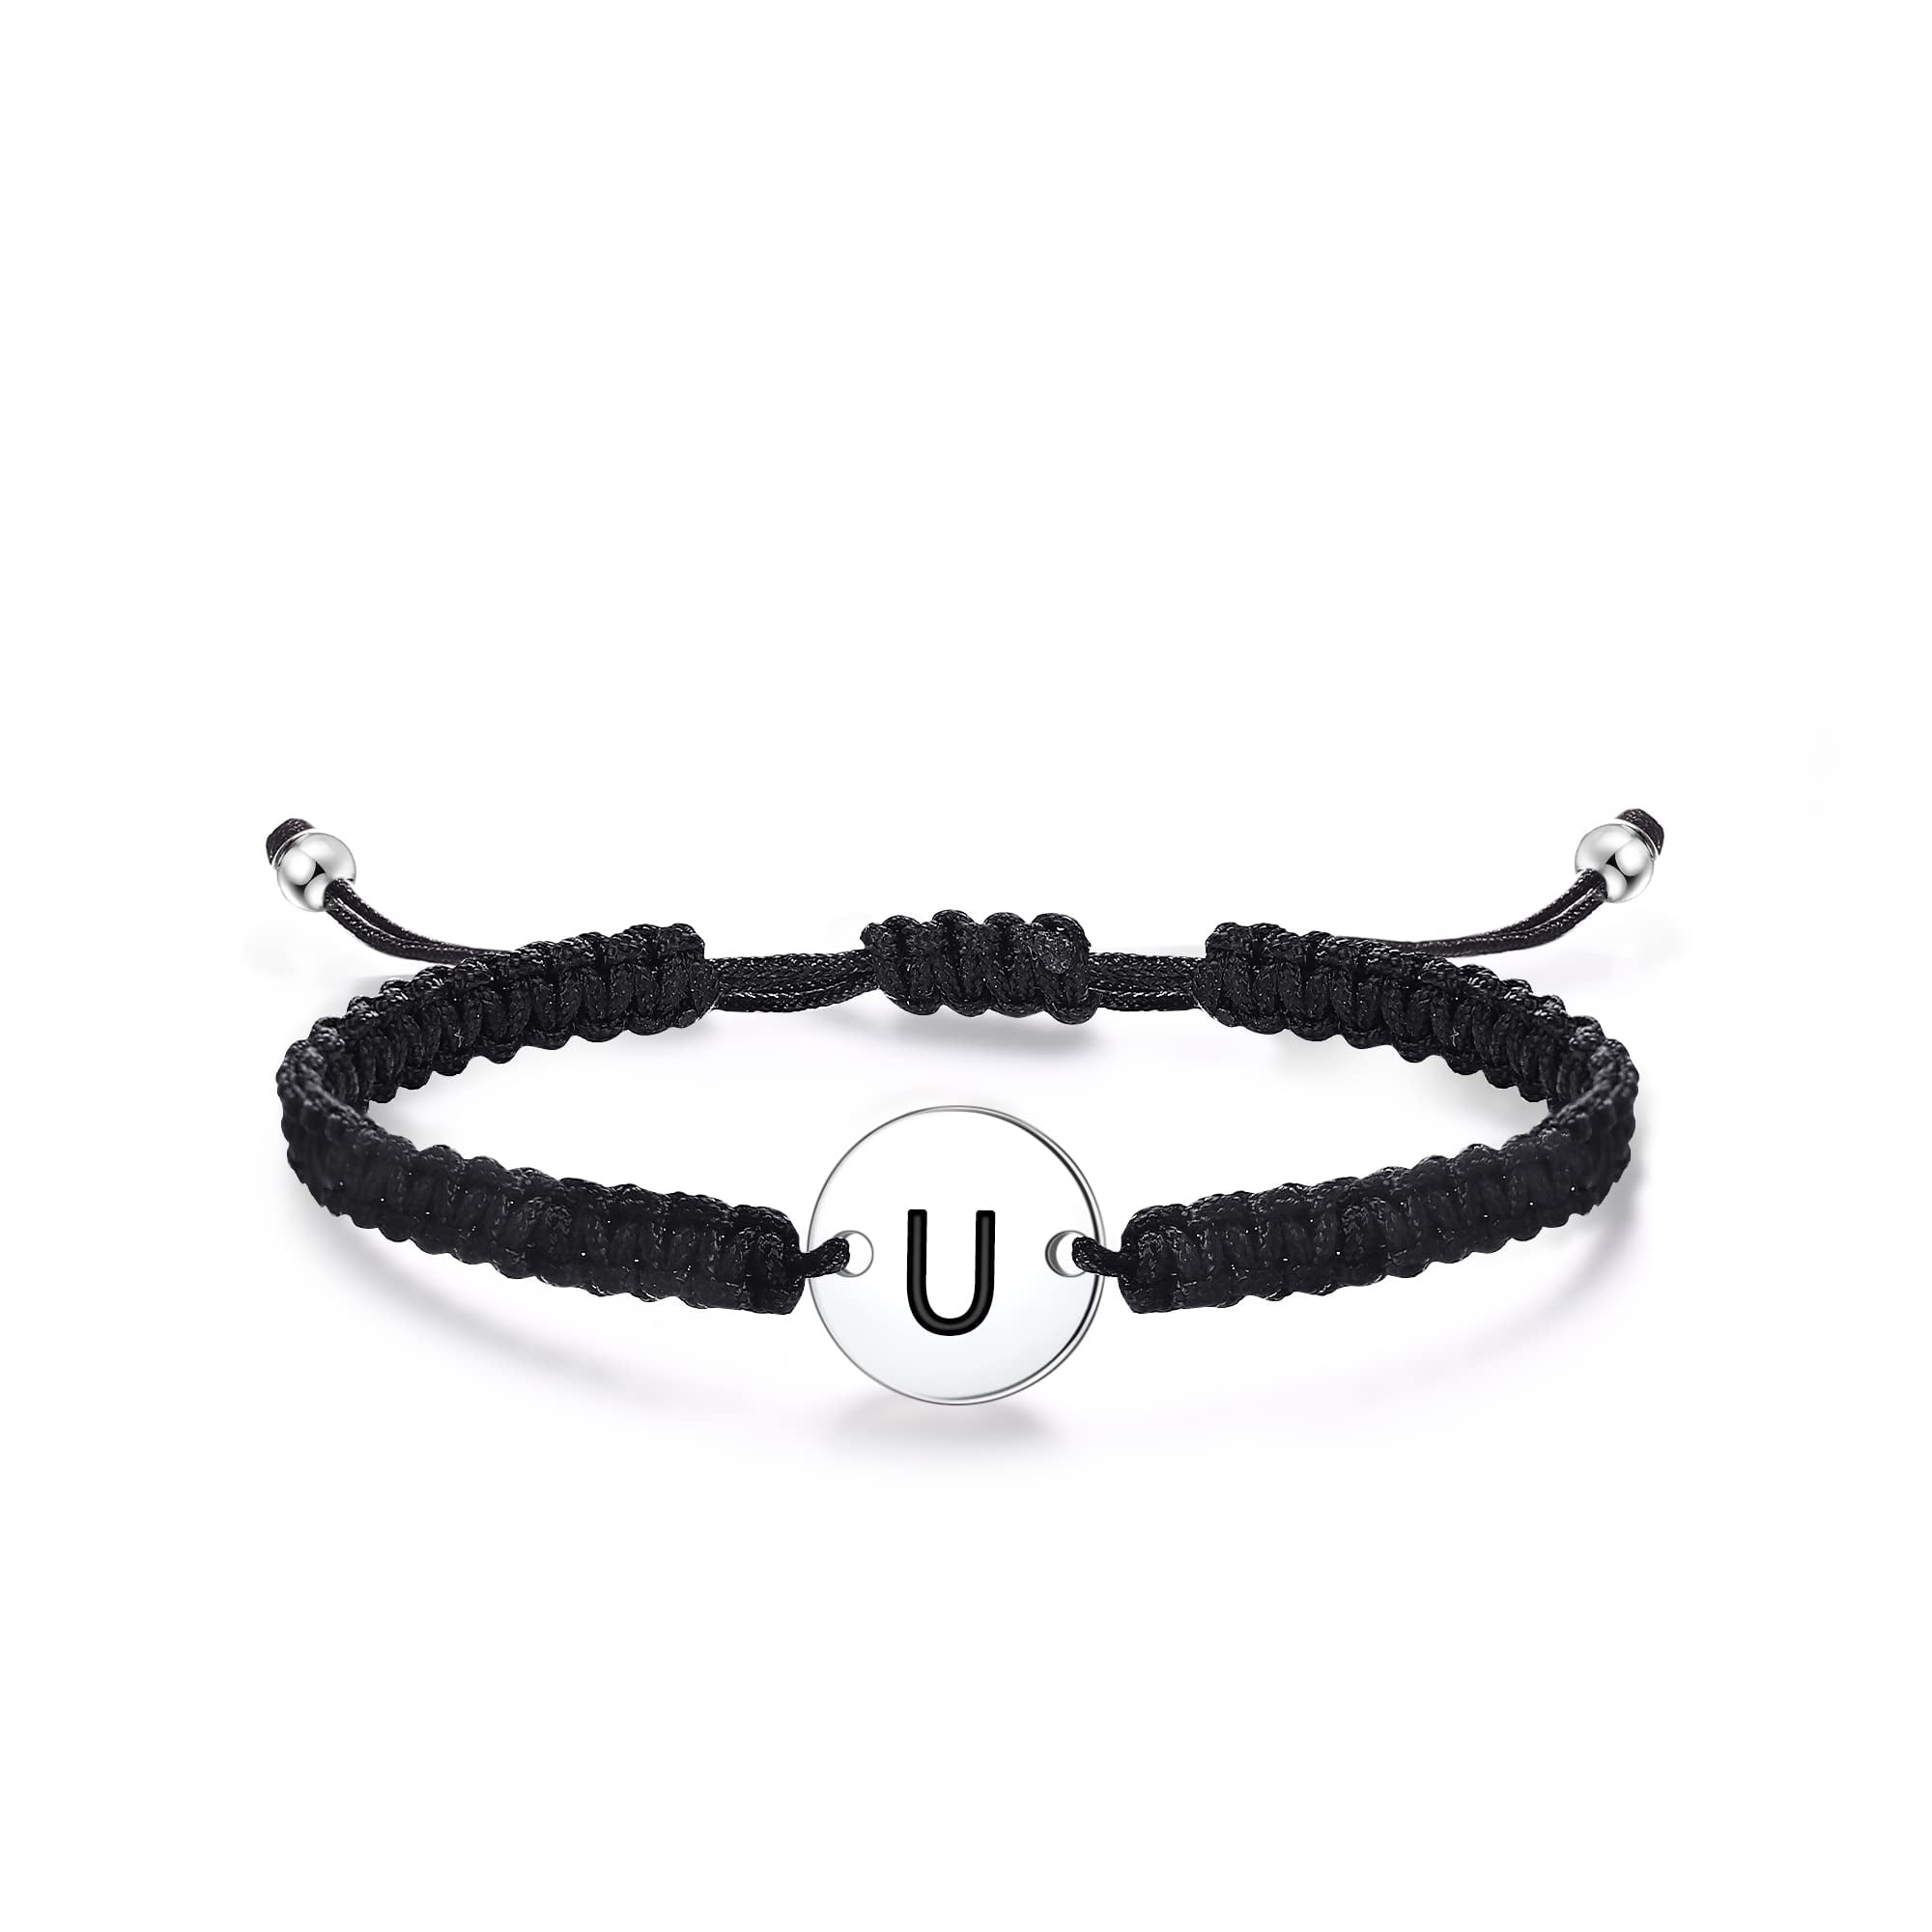 AUNOOL Initial Bracelets for Women Girls S925 Sterling Silver